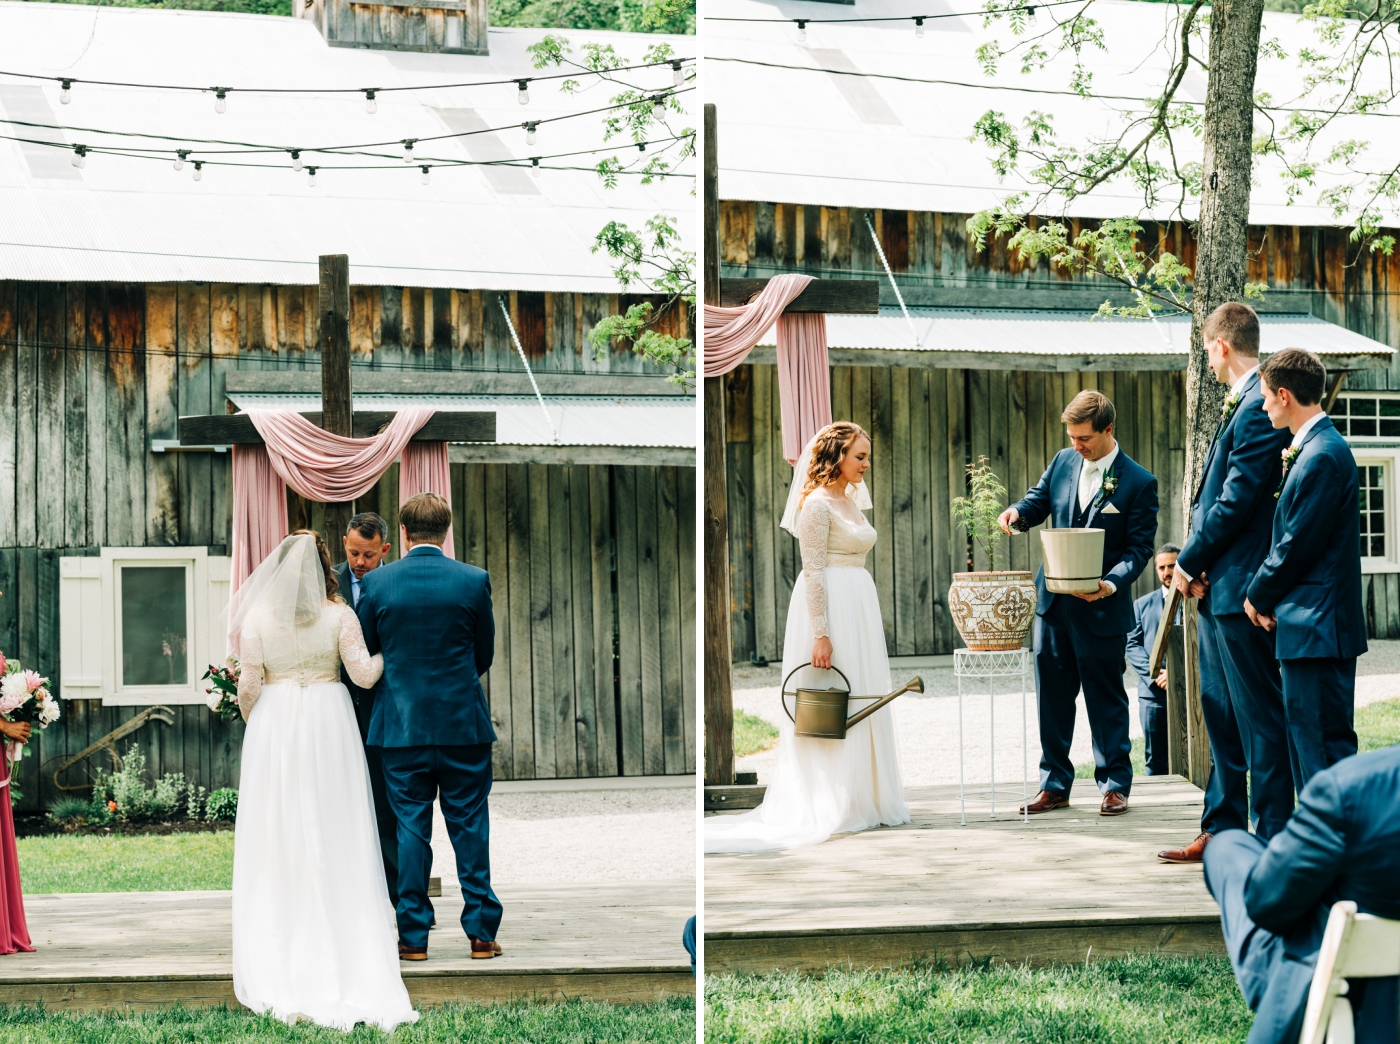 An outdoor wedding in Nashville, Indiana